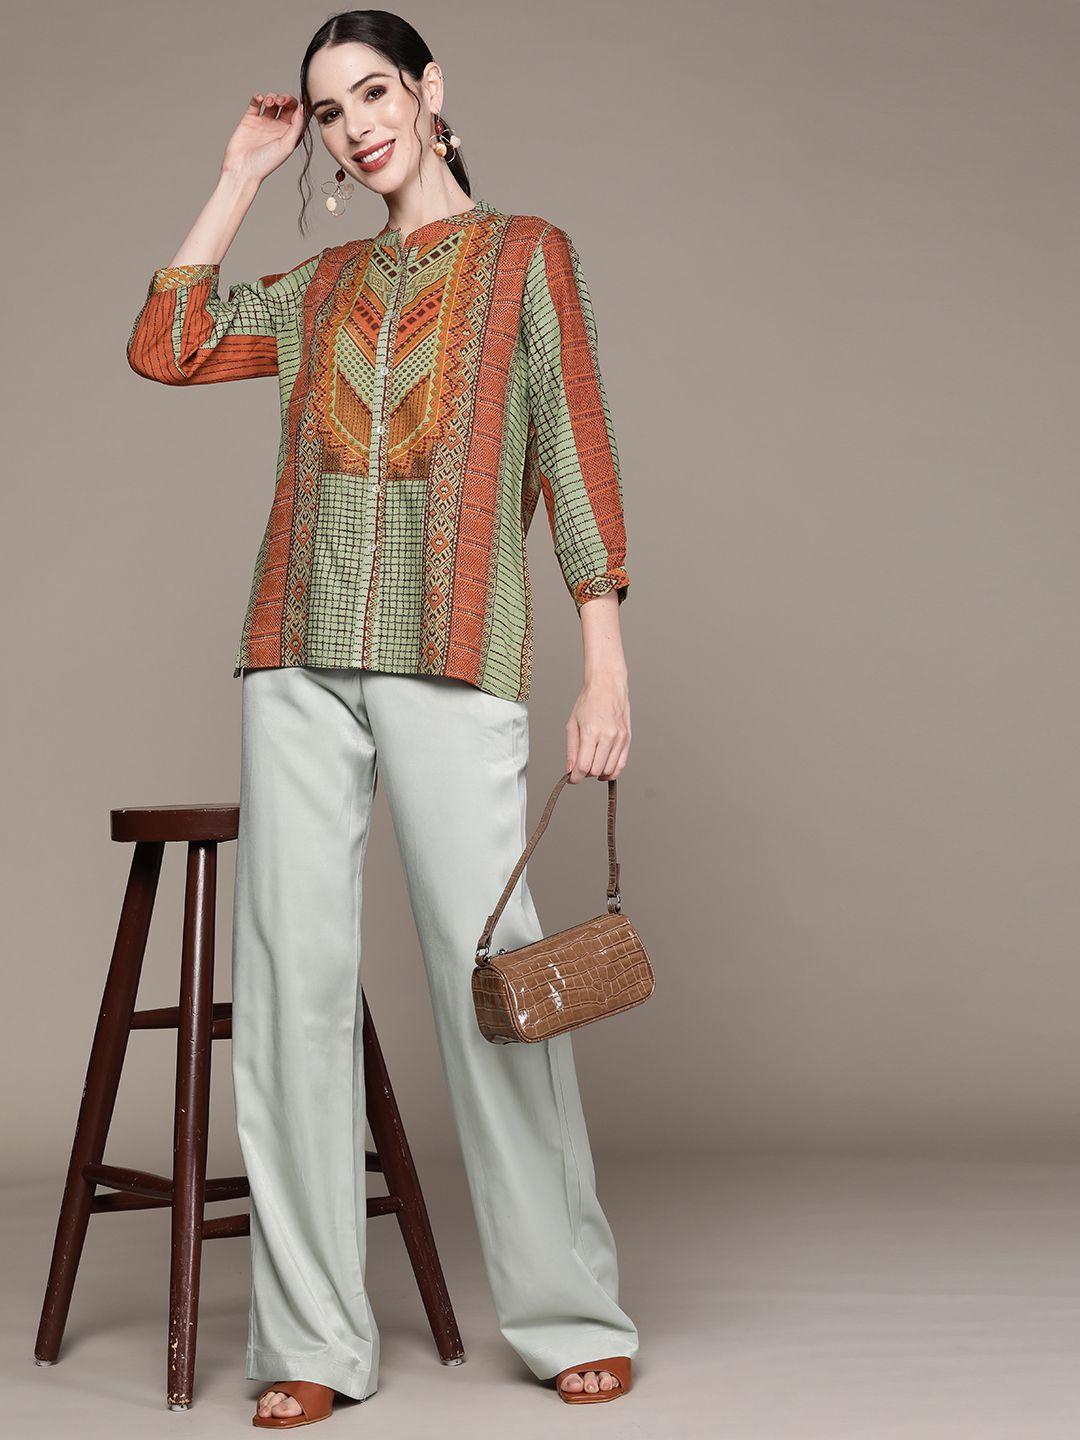 aarke-ritu-kumar-women-green-&-brown-print-mandarin-collar-shirt-style-top